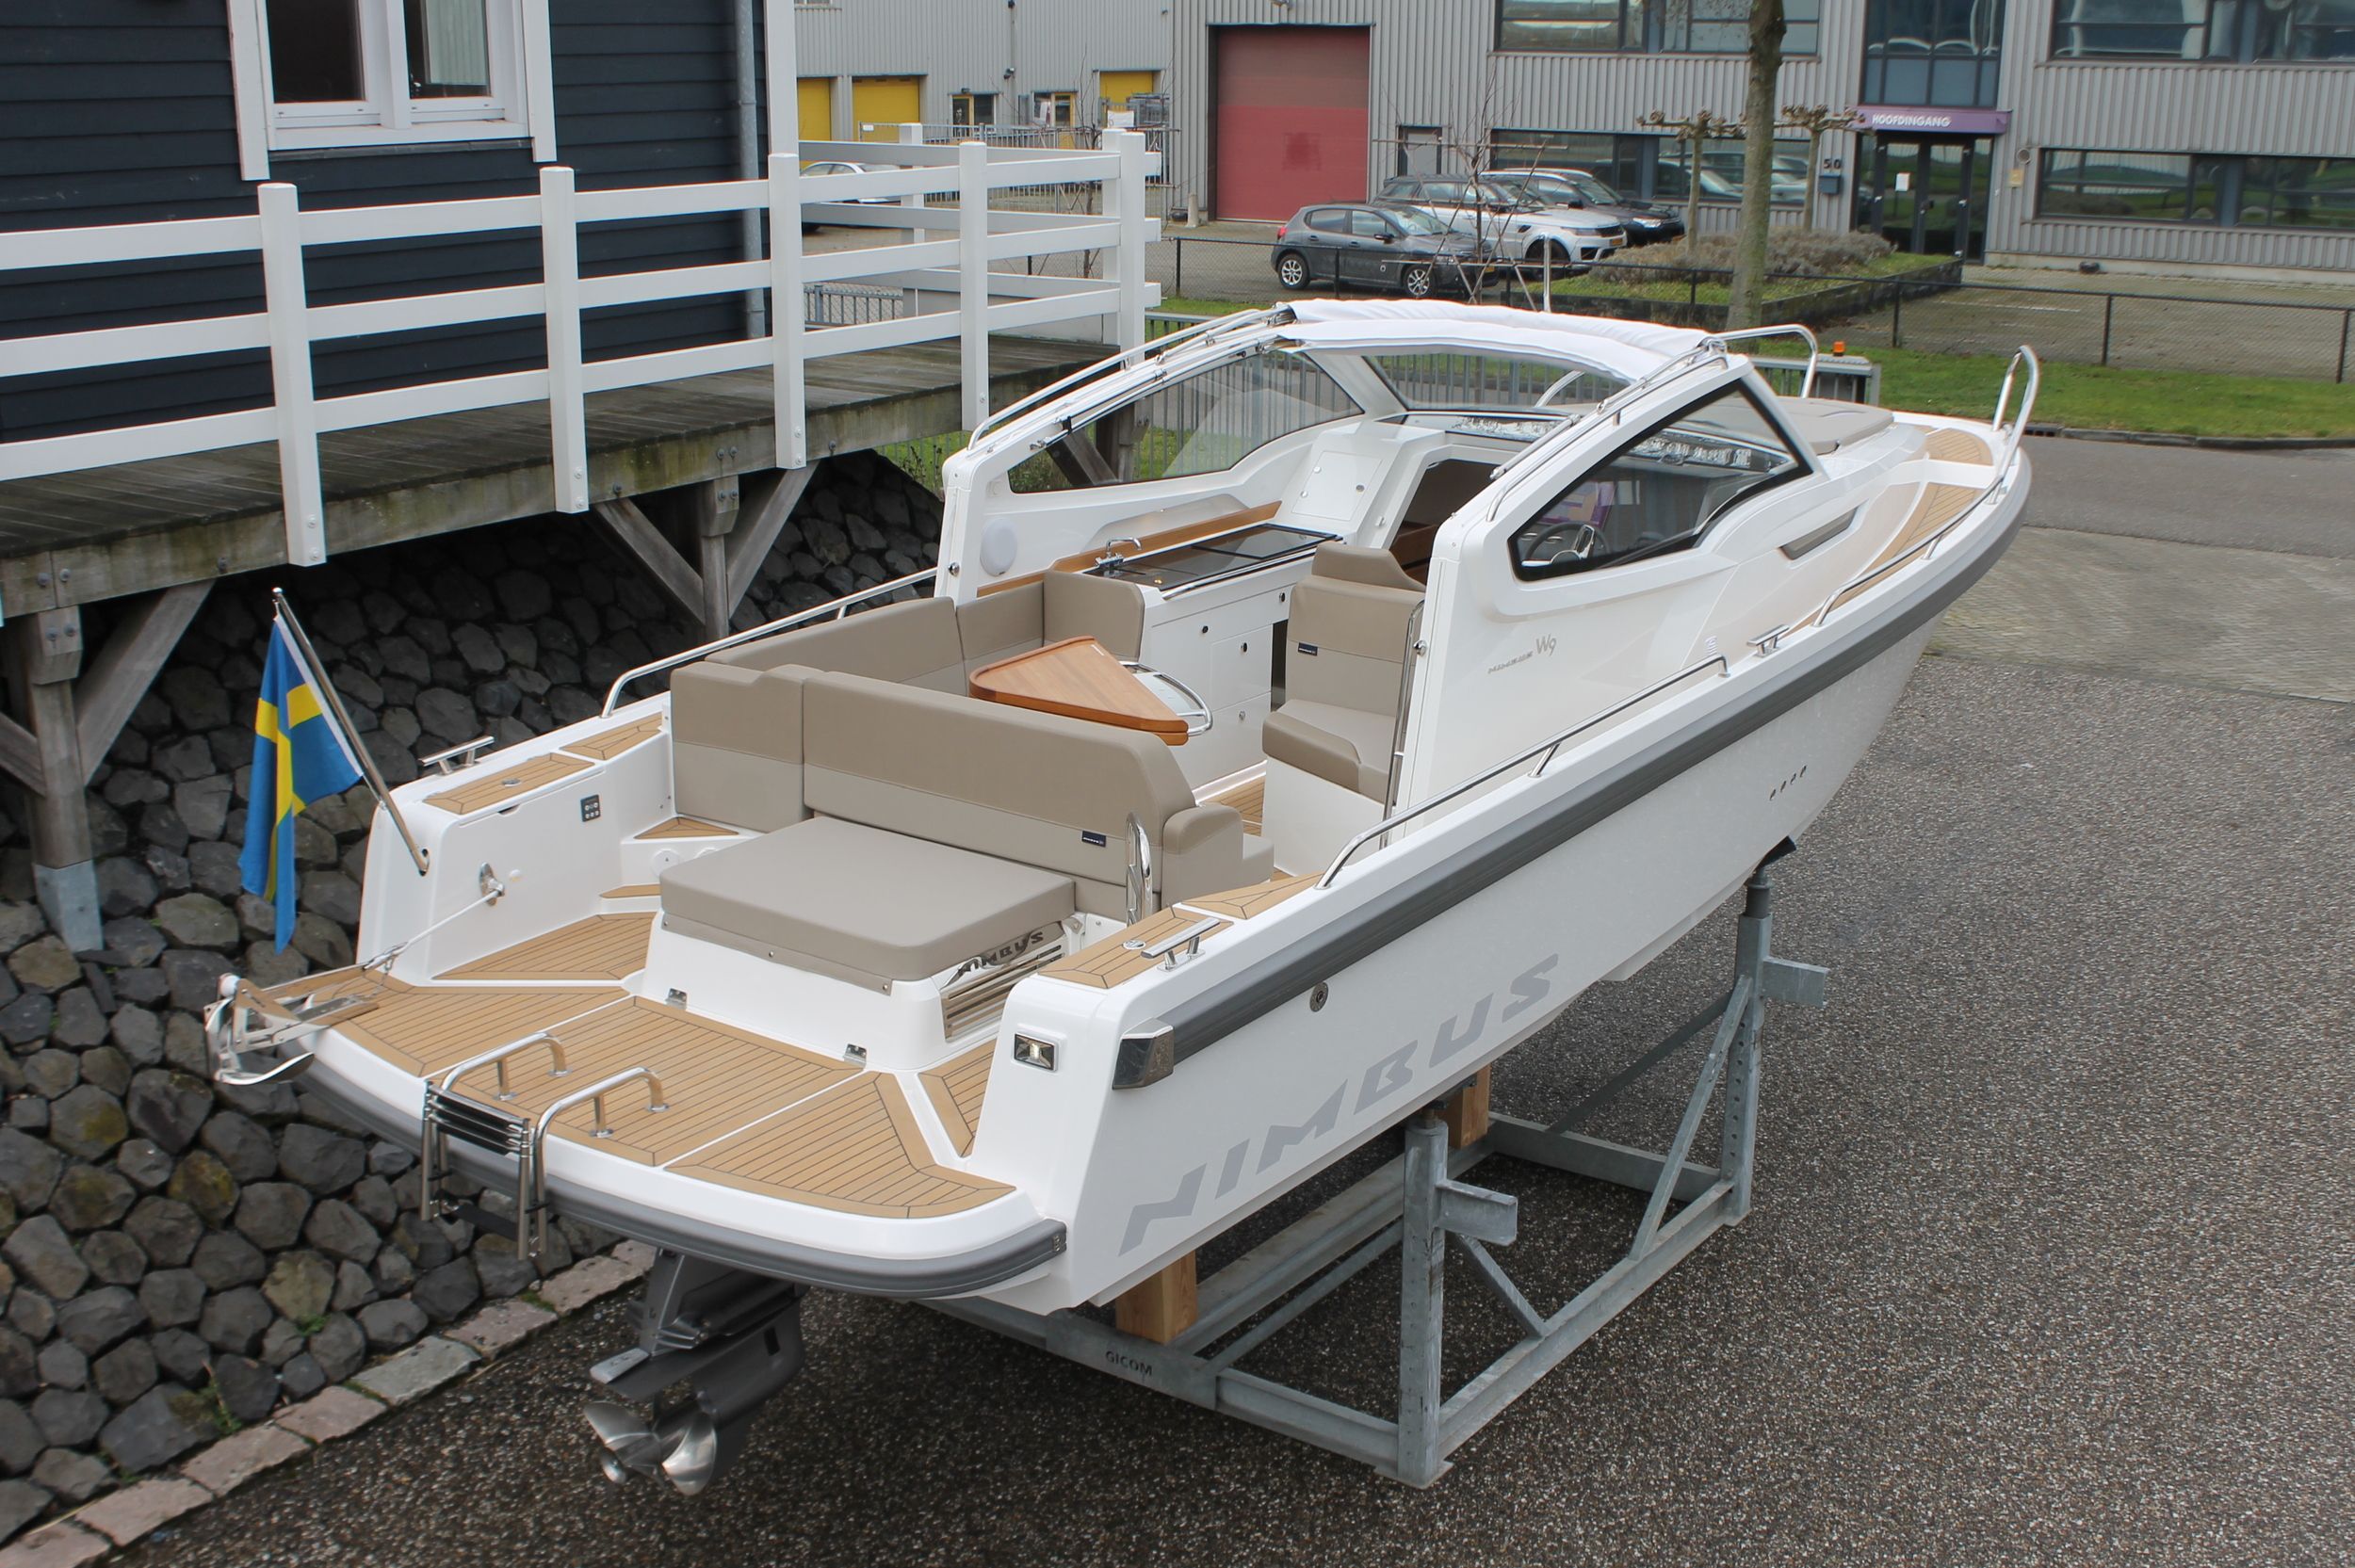 Nimbus W9 boat for sale, Motor Yacht 